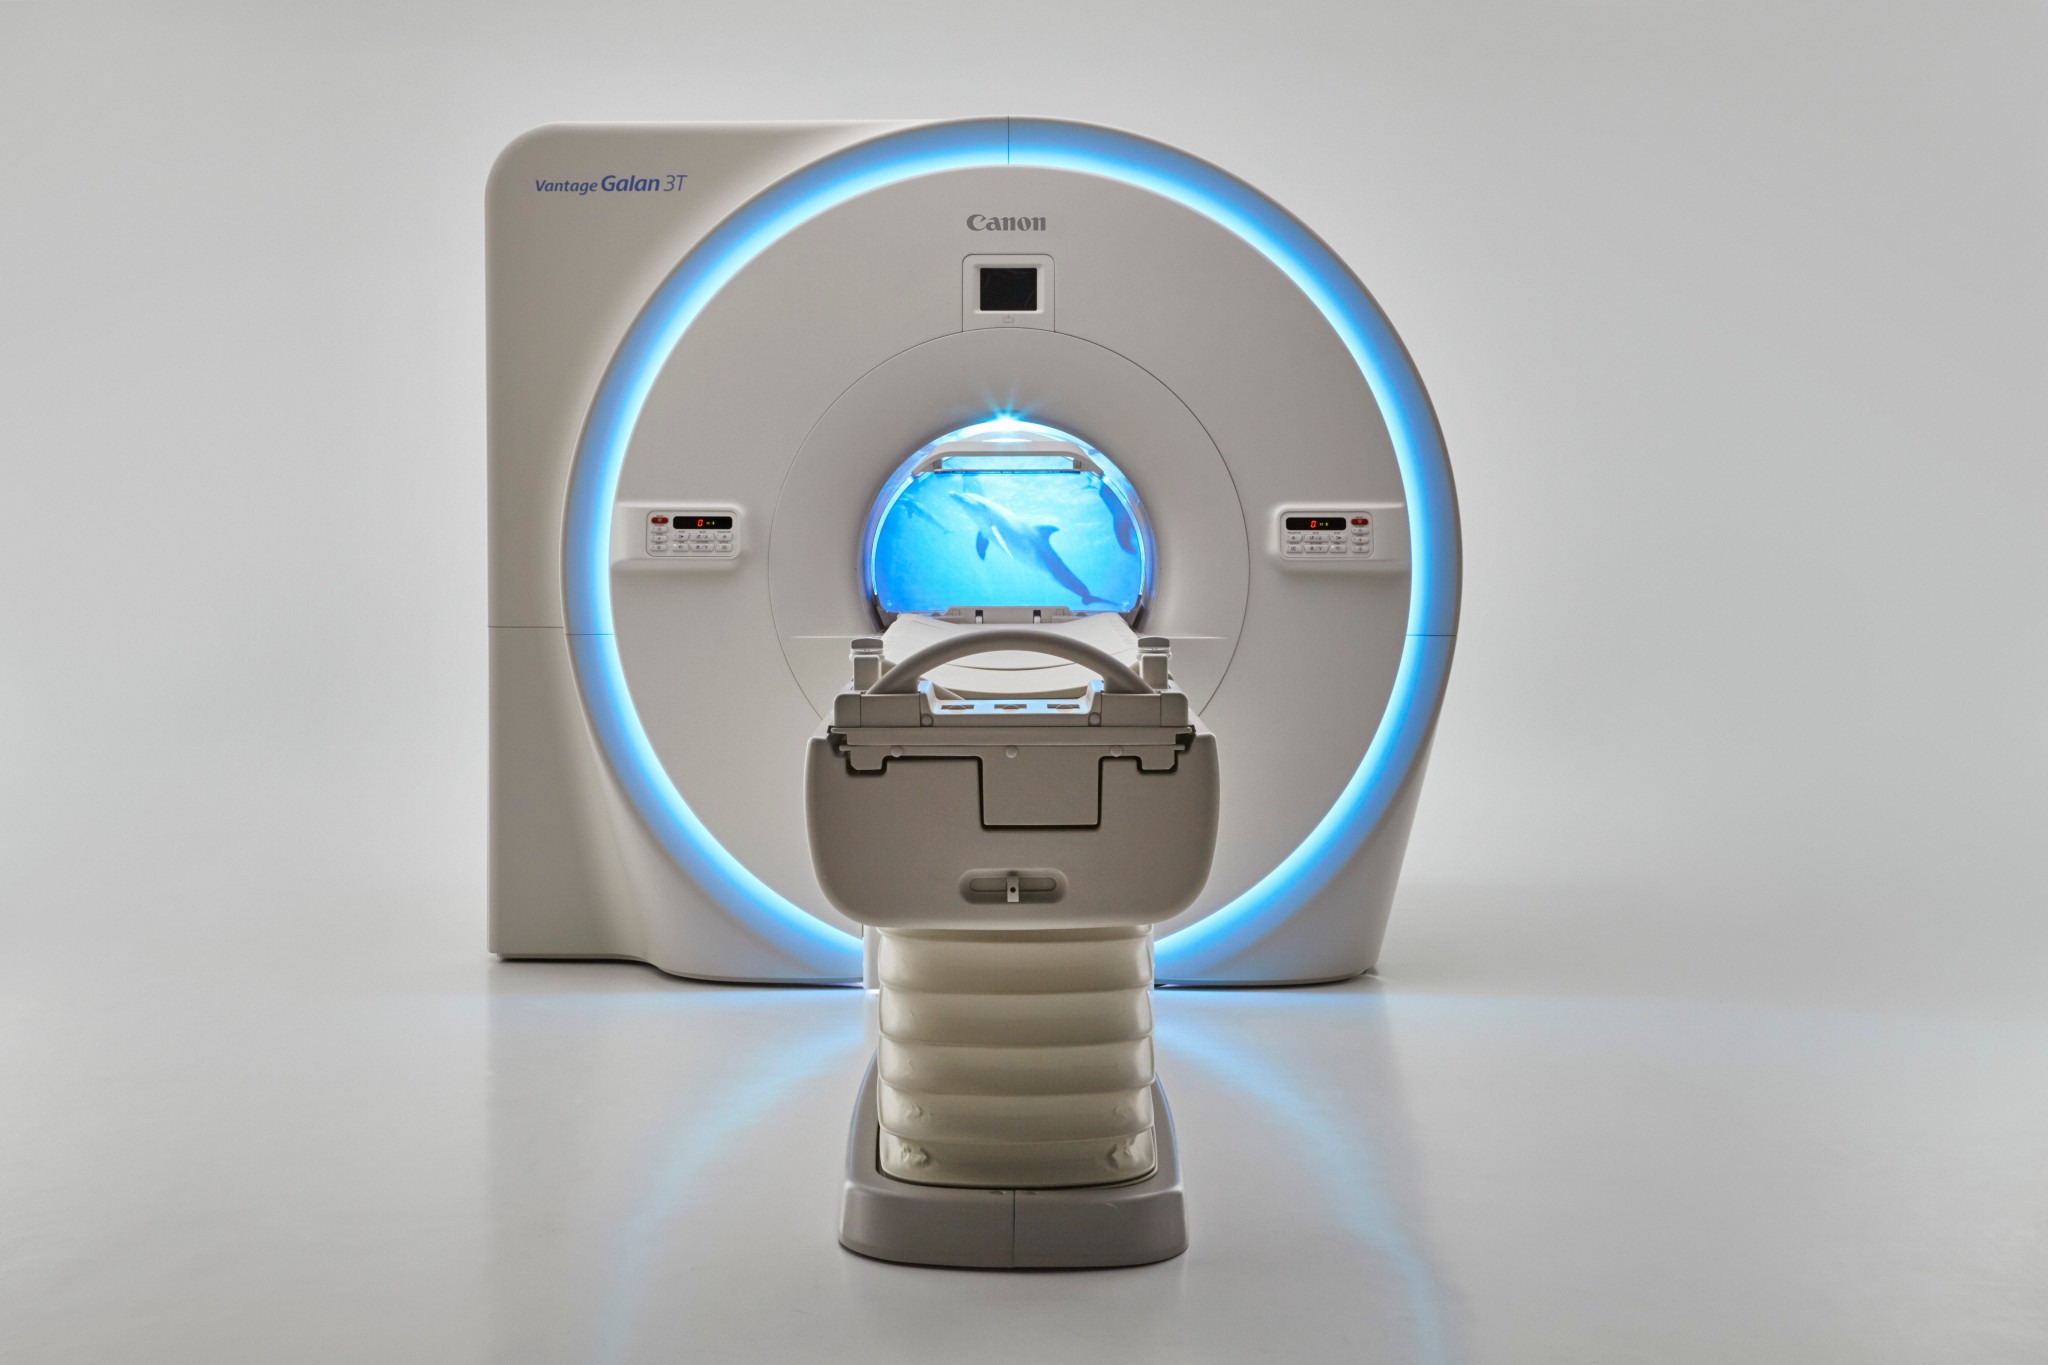 Canon Medical’s Vantage Galan 3T MRI scanner (Credit: Canon Medical). vanta...